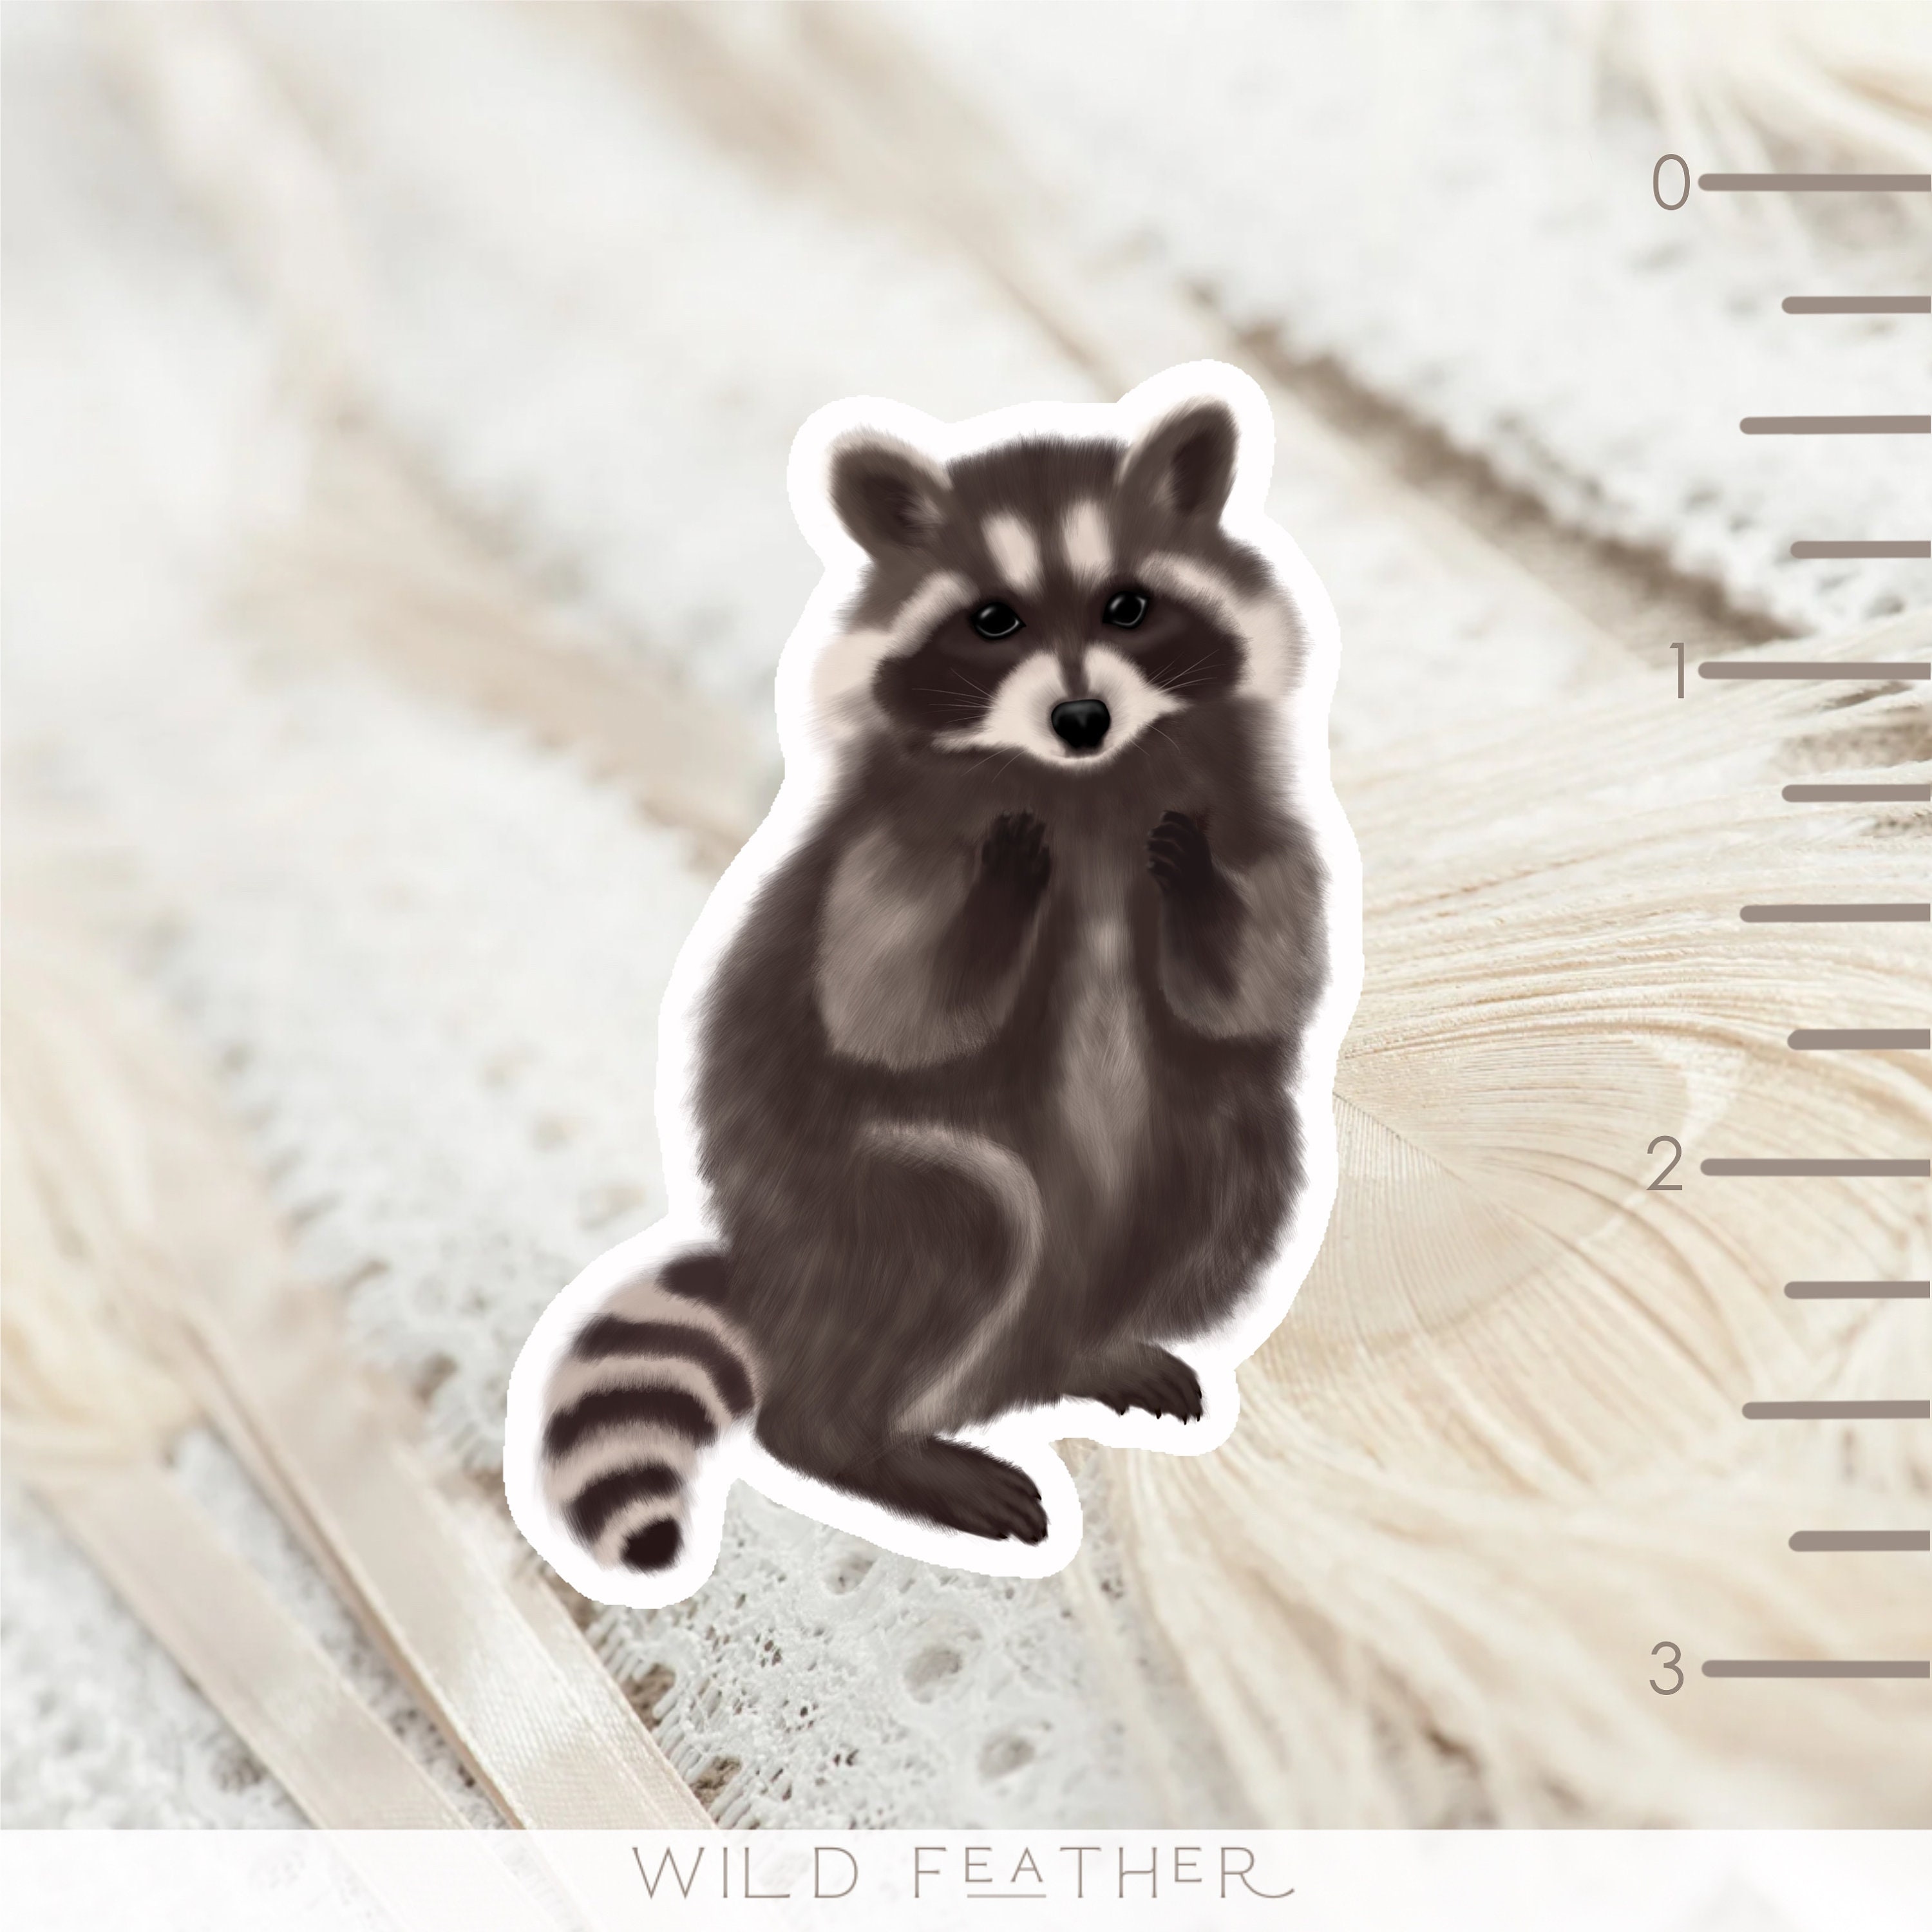 Raccoon Sticker Illustration Waterproof - Buy Any 4 For $1.75 Each  Storewide!